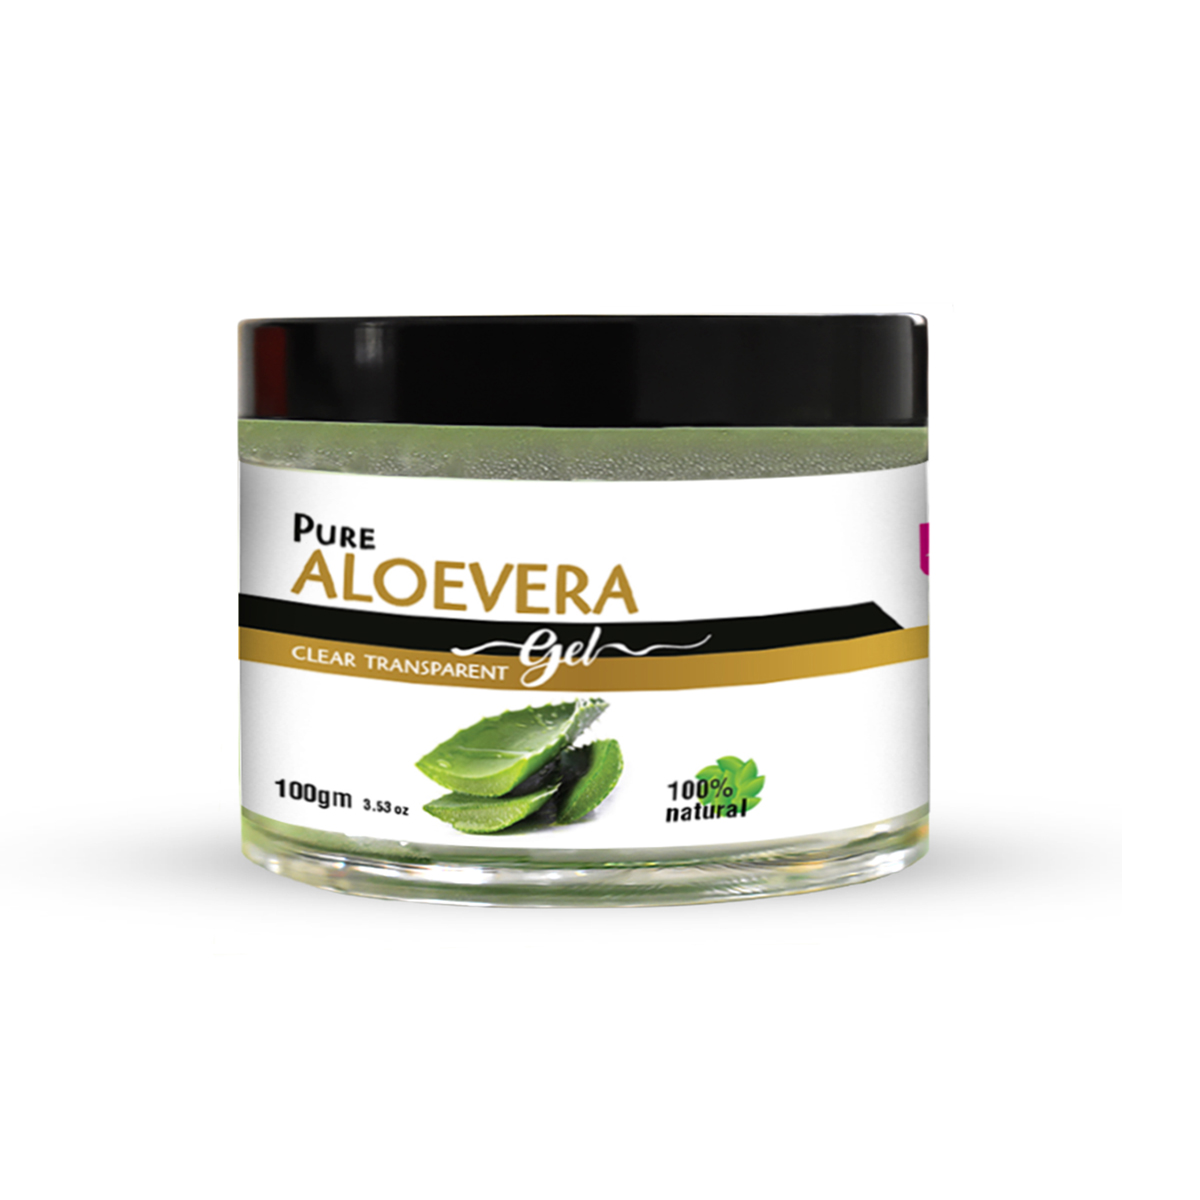 Aloe vera clear gel | Pure transparent multipurpose gel | For Face, Body  and Hair - 100 gm Aloe vera clear gel 1 - Kerala Naturals Aloe vera clear  gel